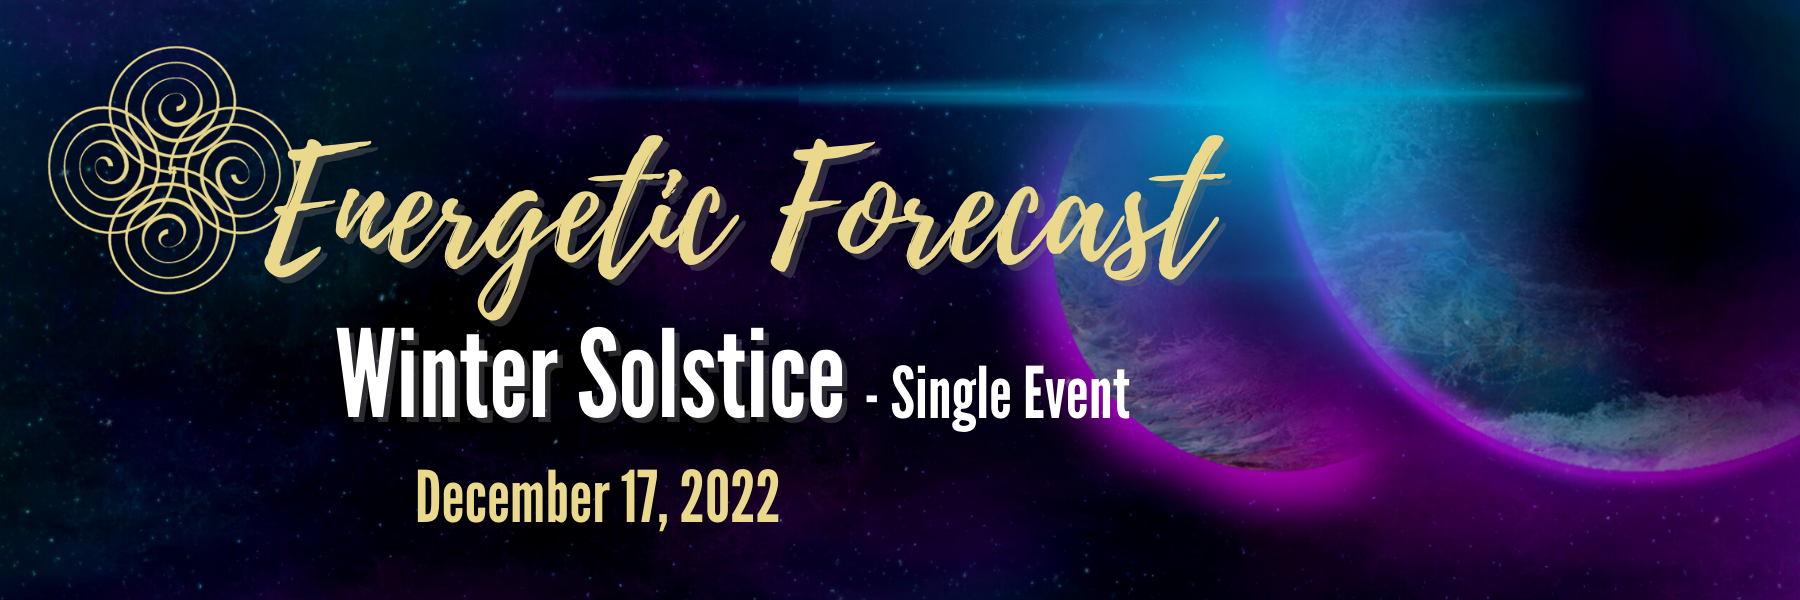 Energetic Forecast – Winter Solstice 2022 – Single Event